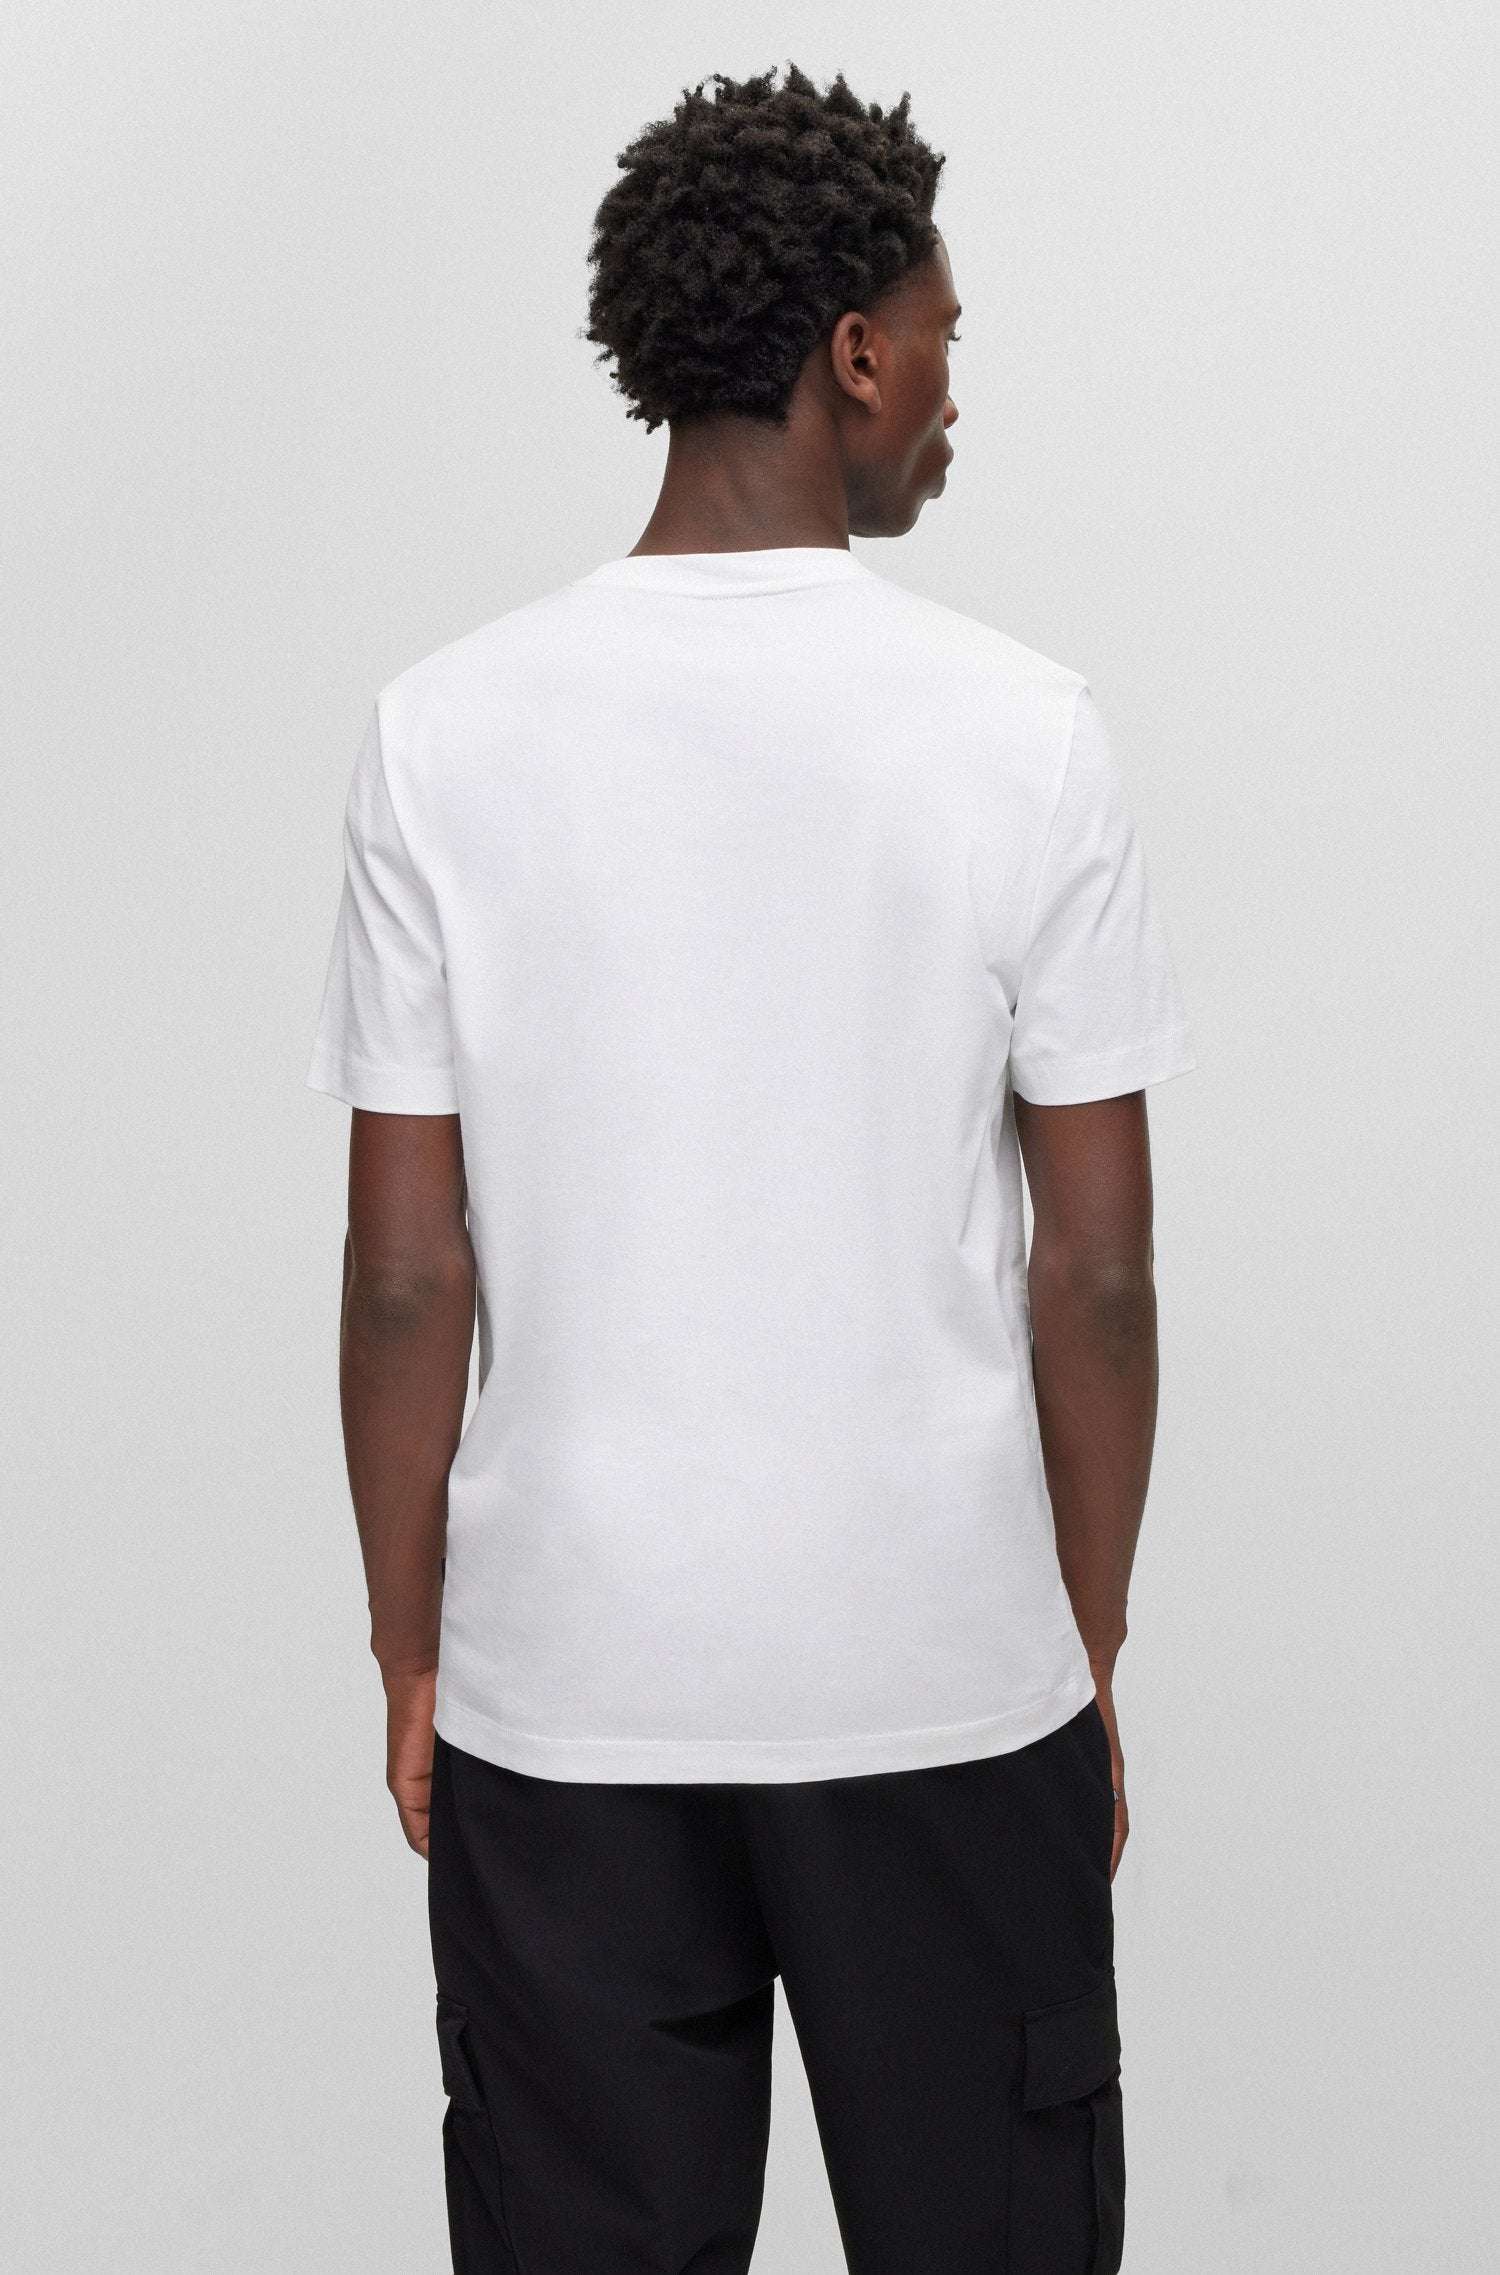 BOSS - TESSLER 186 White SLIM FIT Cotton T-Shirt With Tennis Inspired Print 50486210 100